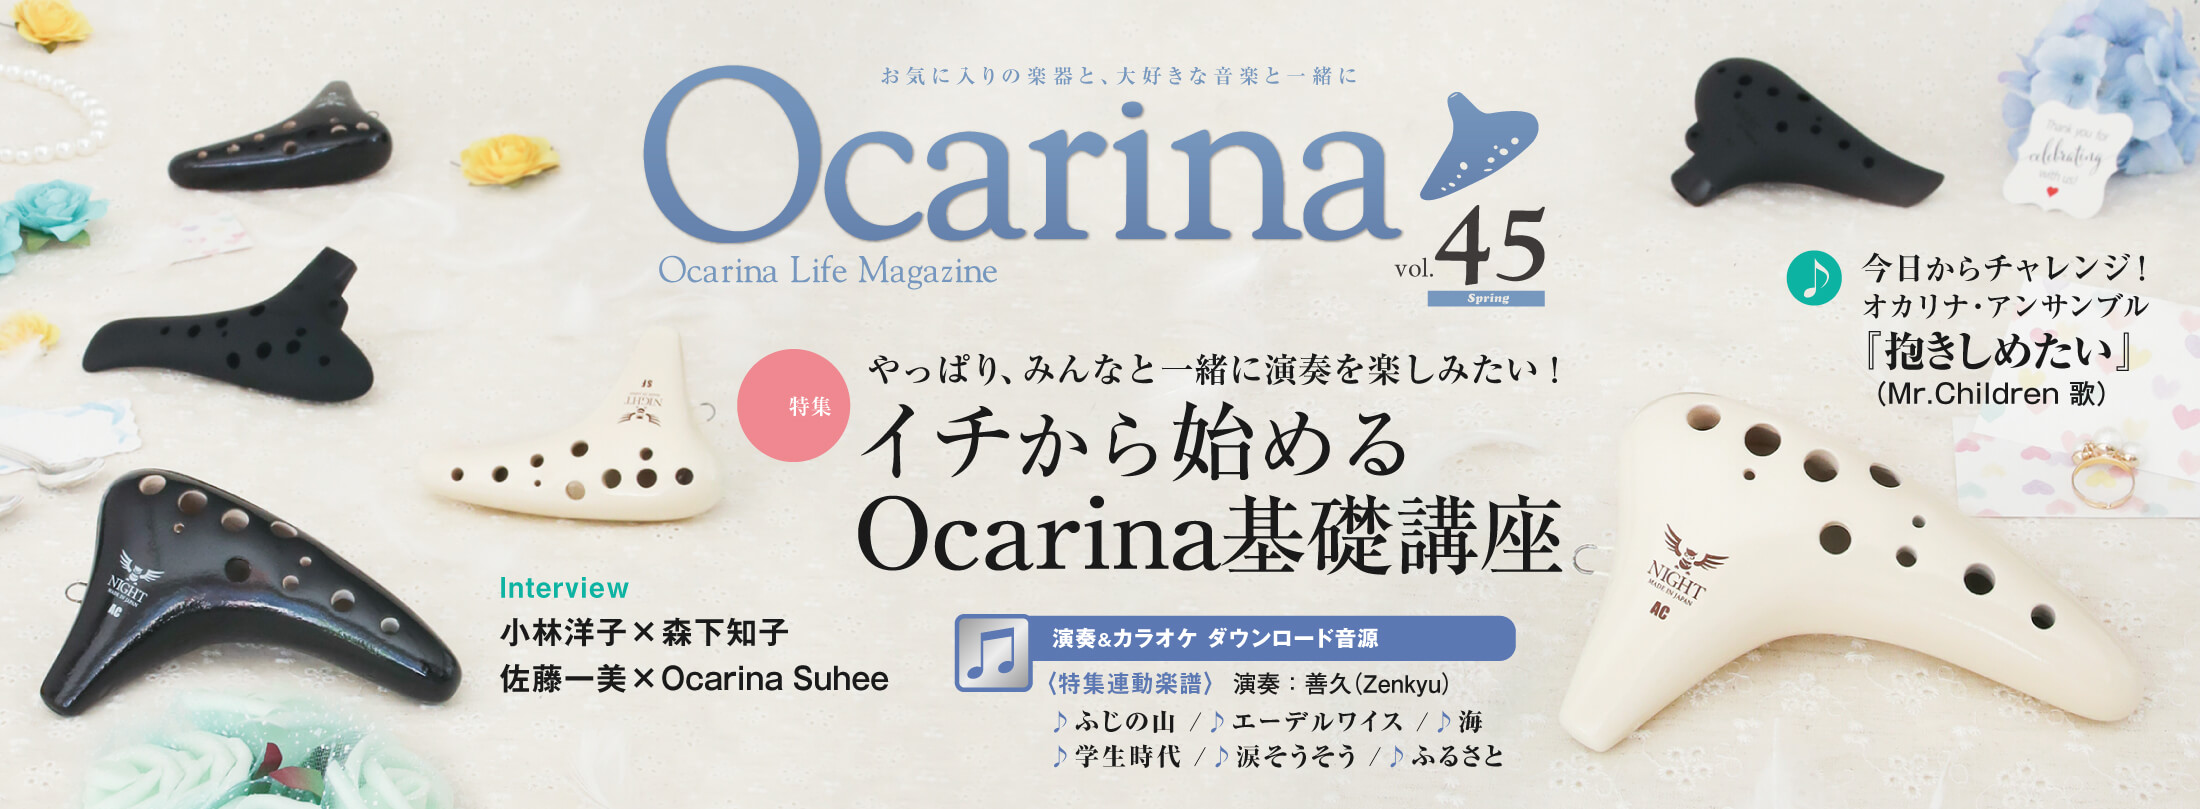 Ocarina 45号